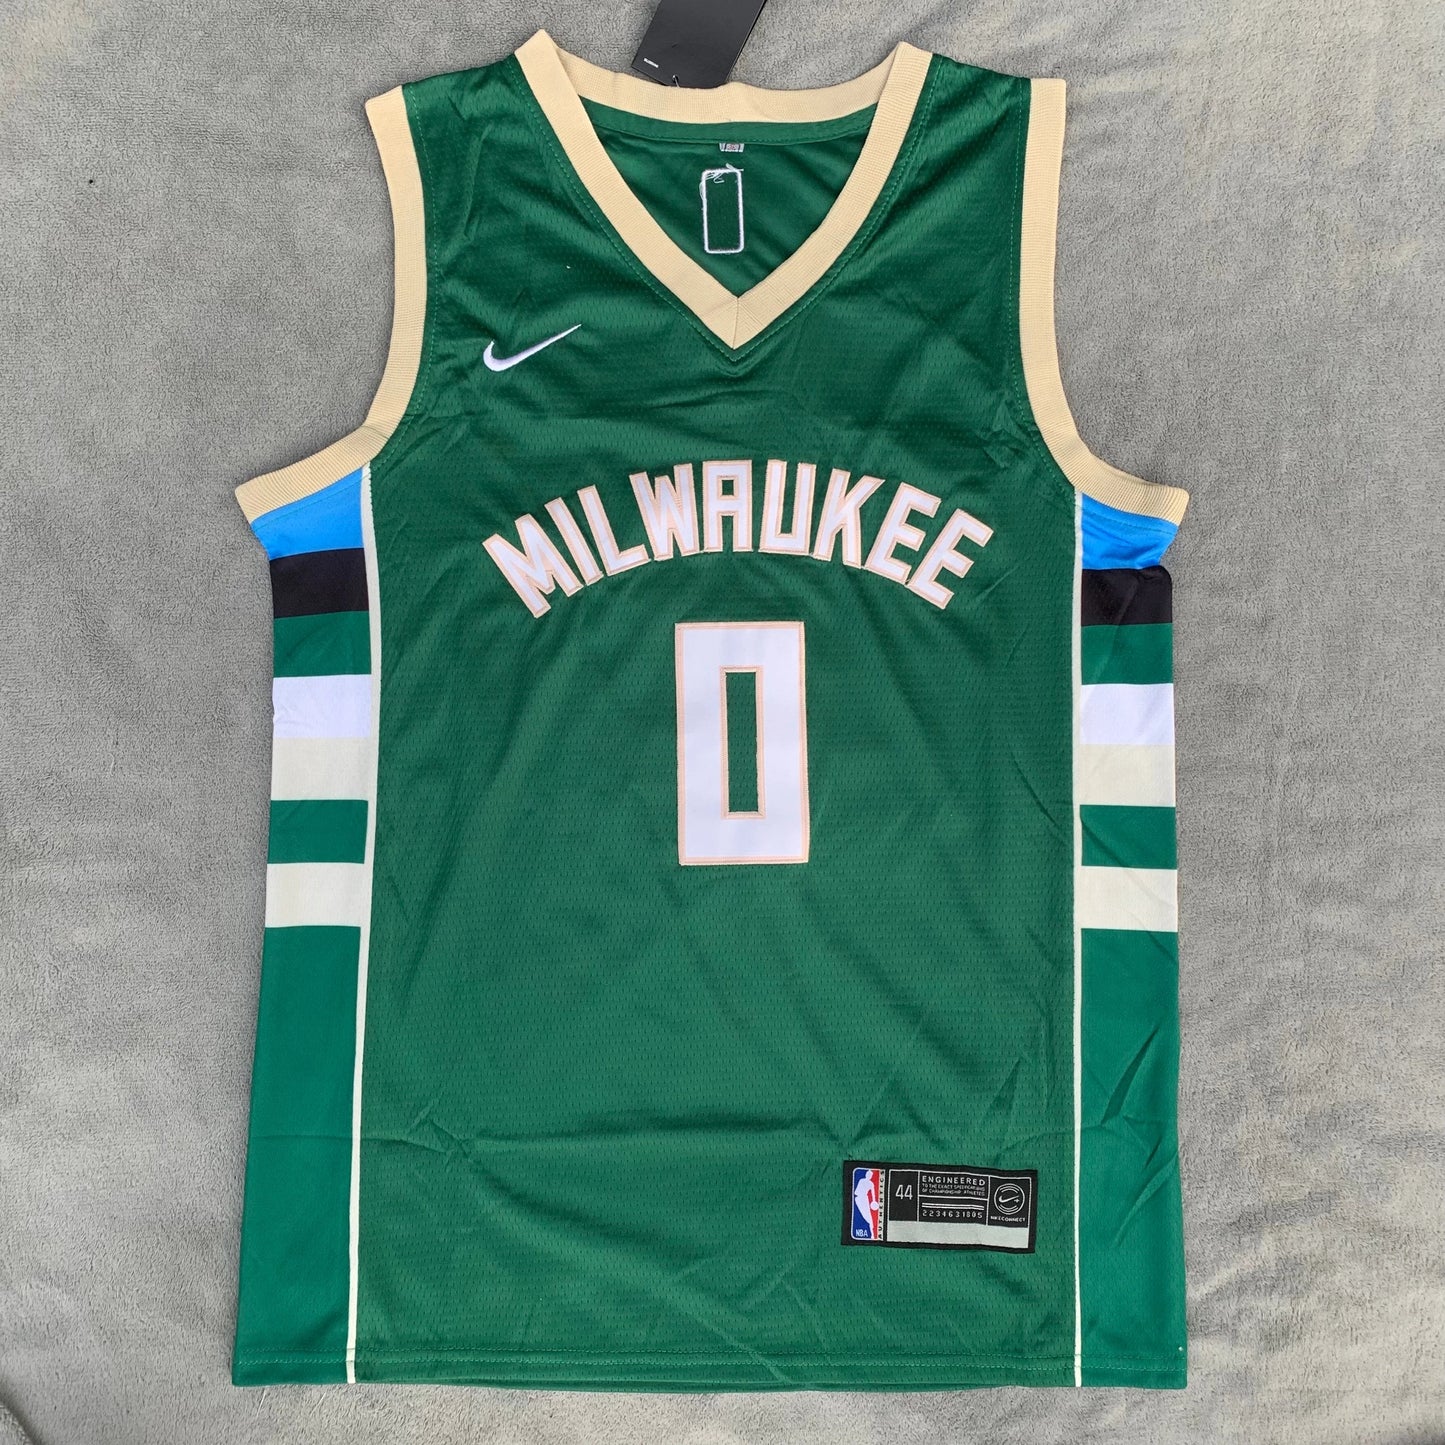 Damian Lillard No. 0 Milwaukee Green Jersey NBA